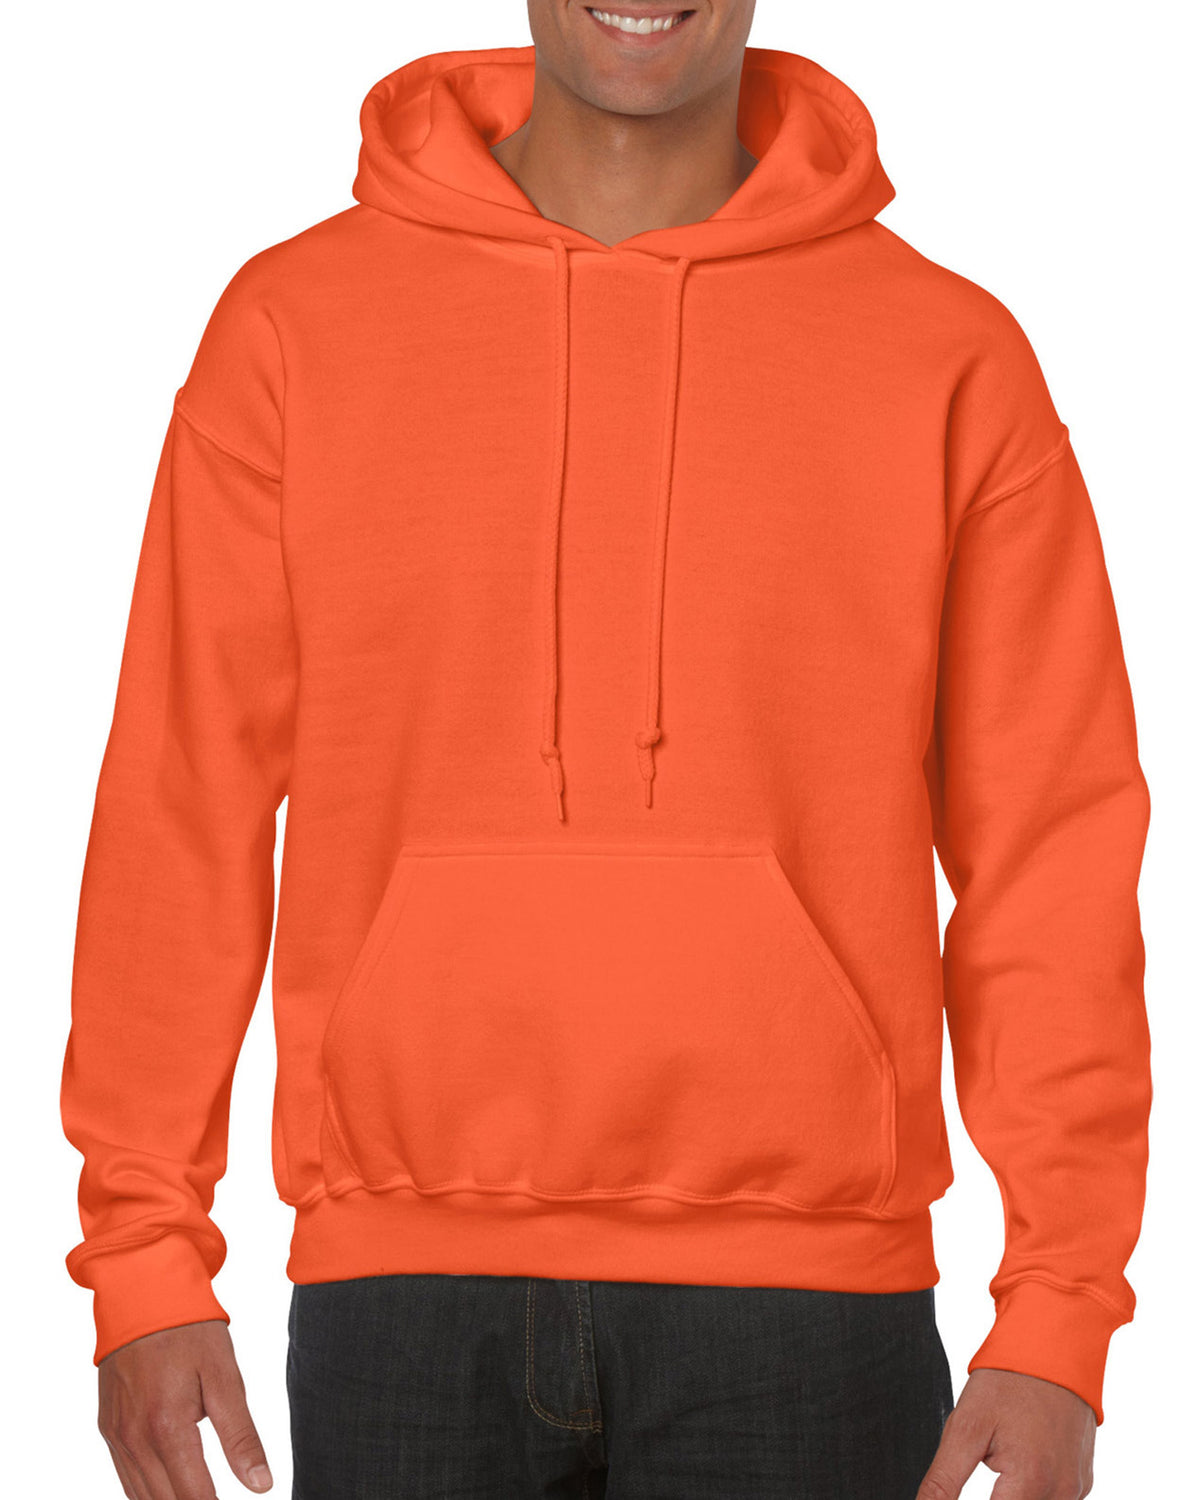 Gildan Heavy Blend Adult Hooded Sweatshirt